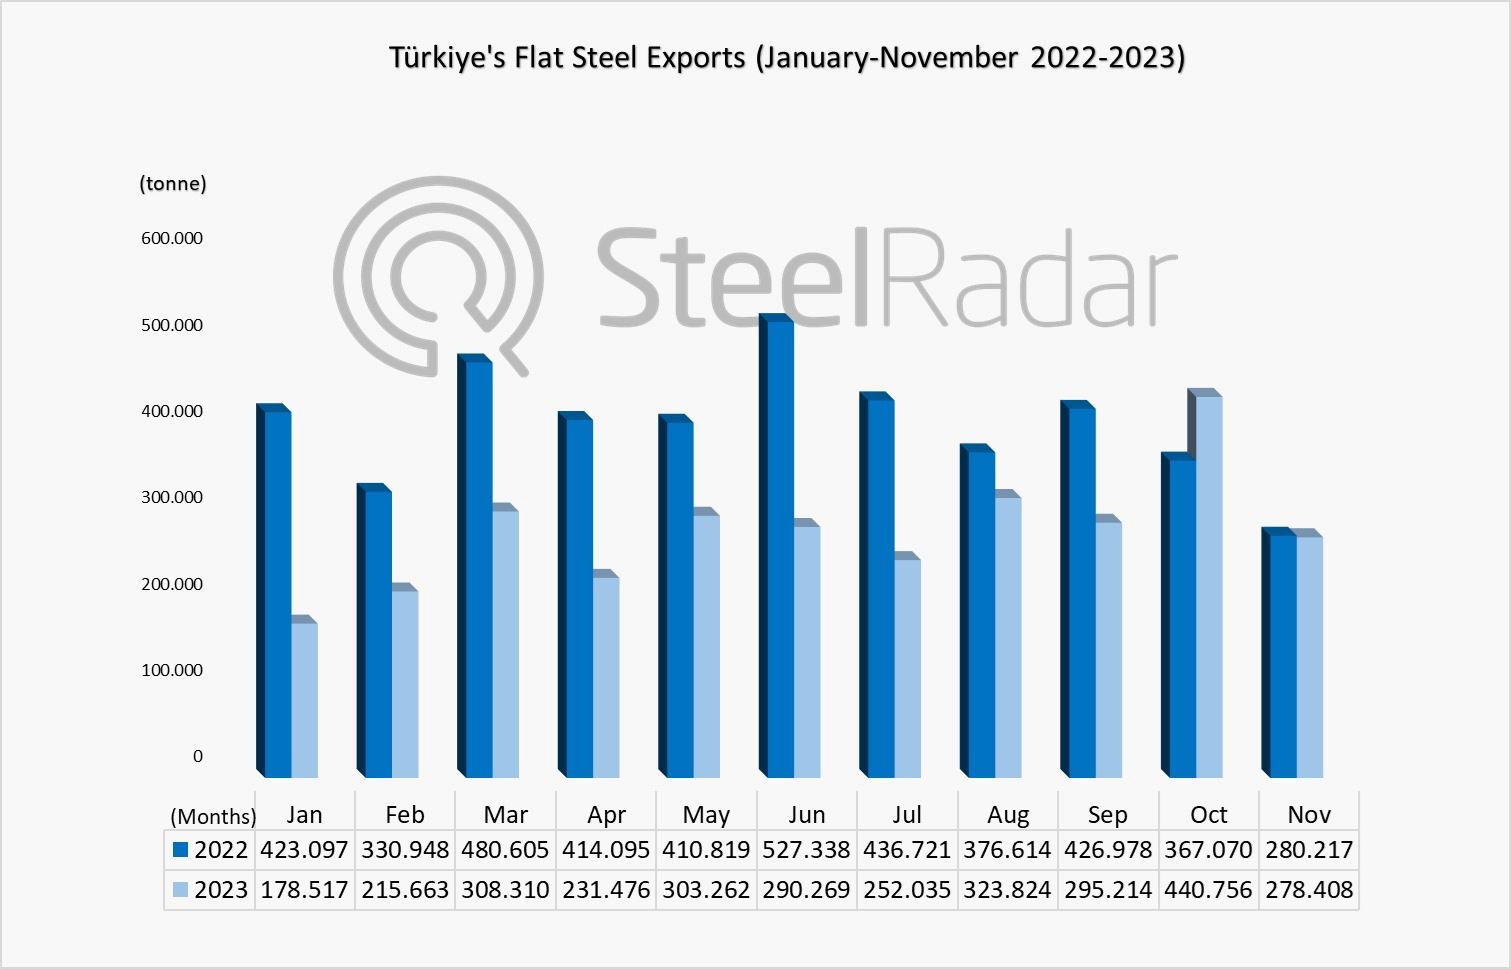 Turkiye flat steel exports down 30.32% in January-November period